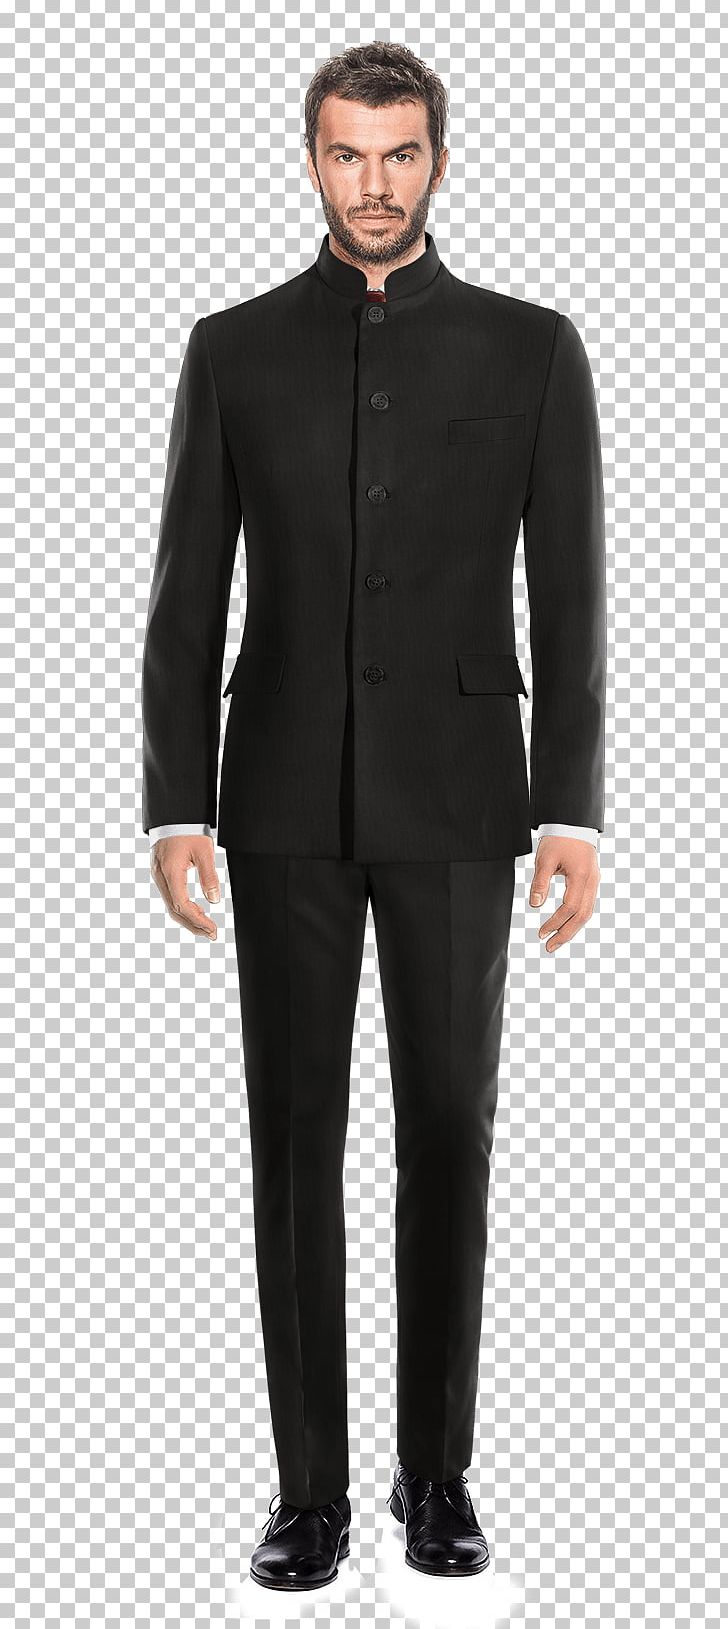 Tuxedo Suit Jacket Lapel Formal Wear PNG, Clipart, Blazer, Blue, Businessperson, Clothing, Coat Free PNG Download